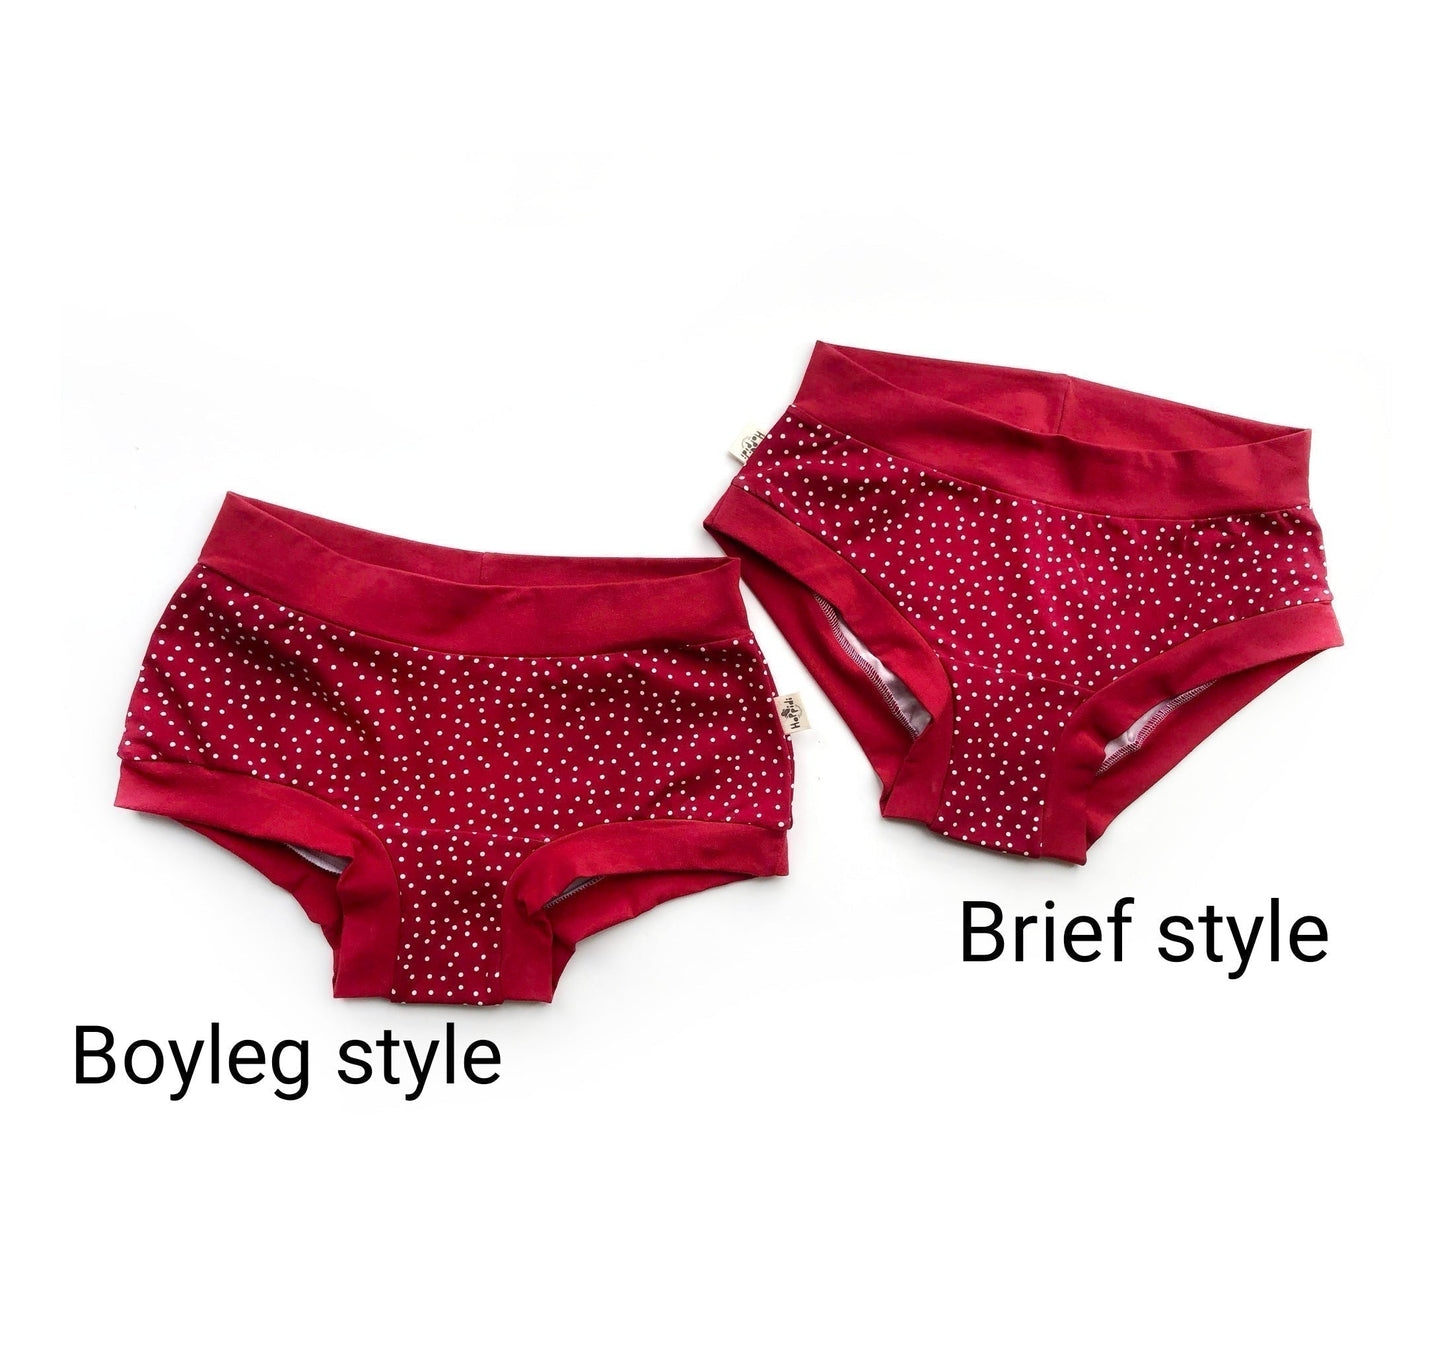 Very pink, solid color organic women's boyleg or brief undies